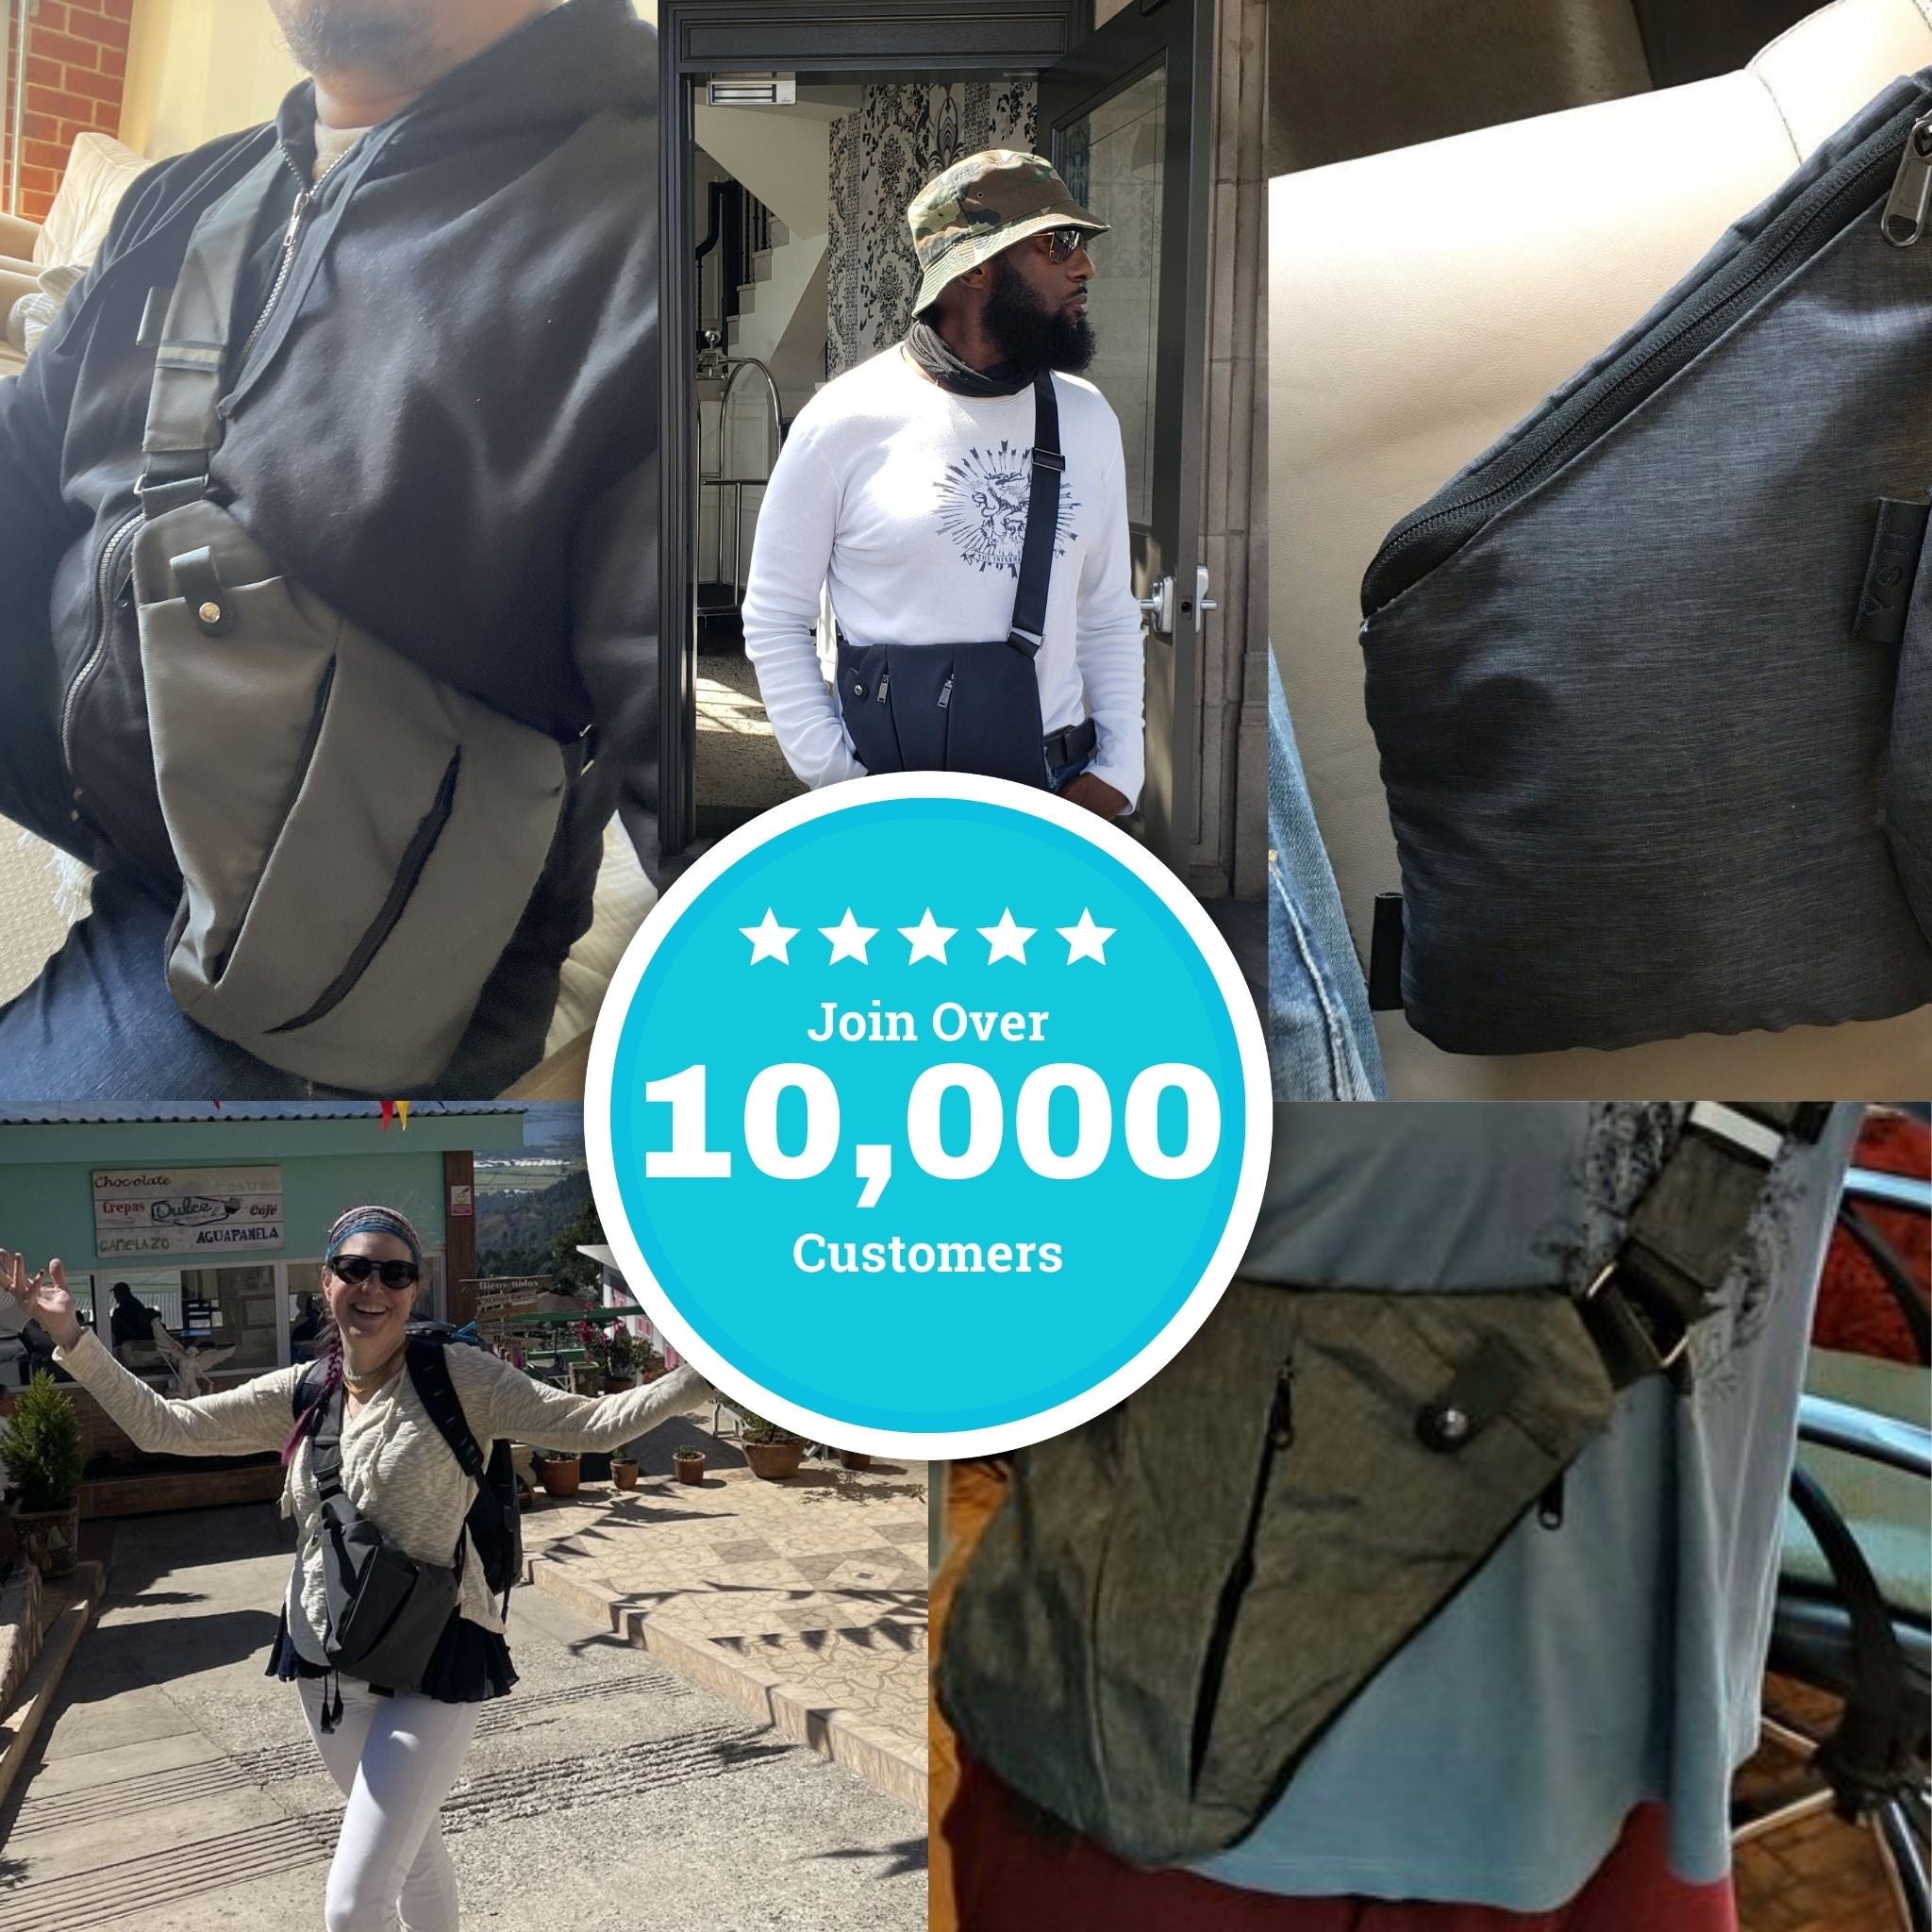 Flex Travel Bag-Sweet Backpacks | High-Quality Backpacks For Every Adventure